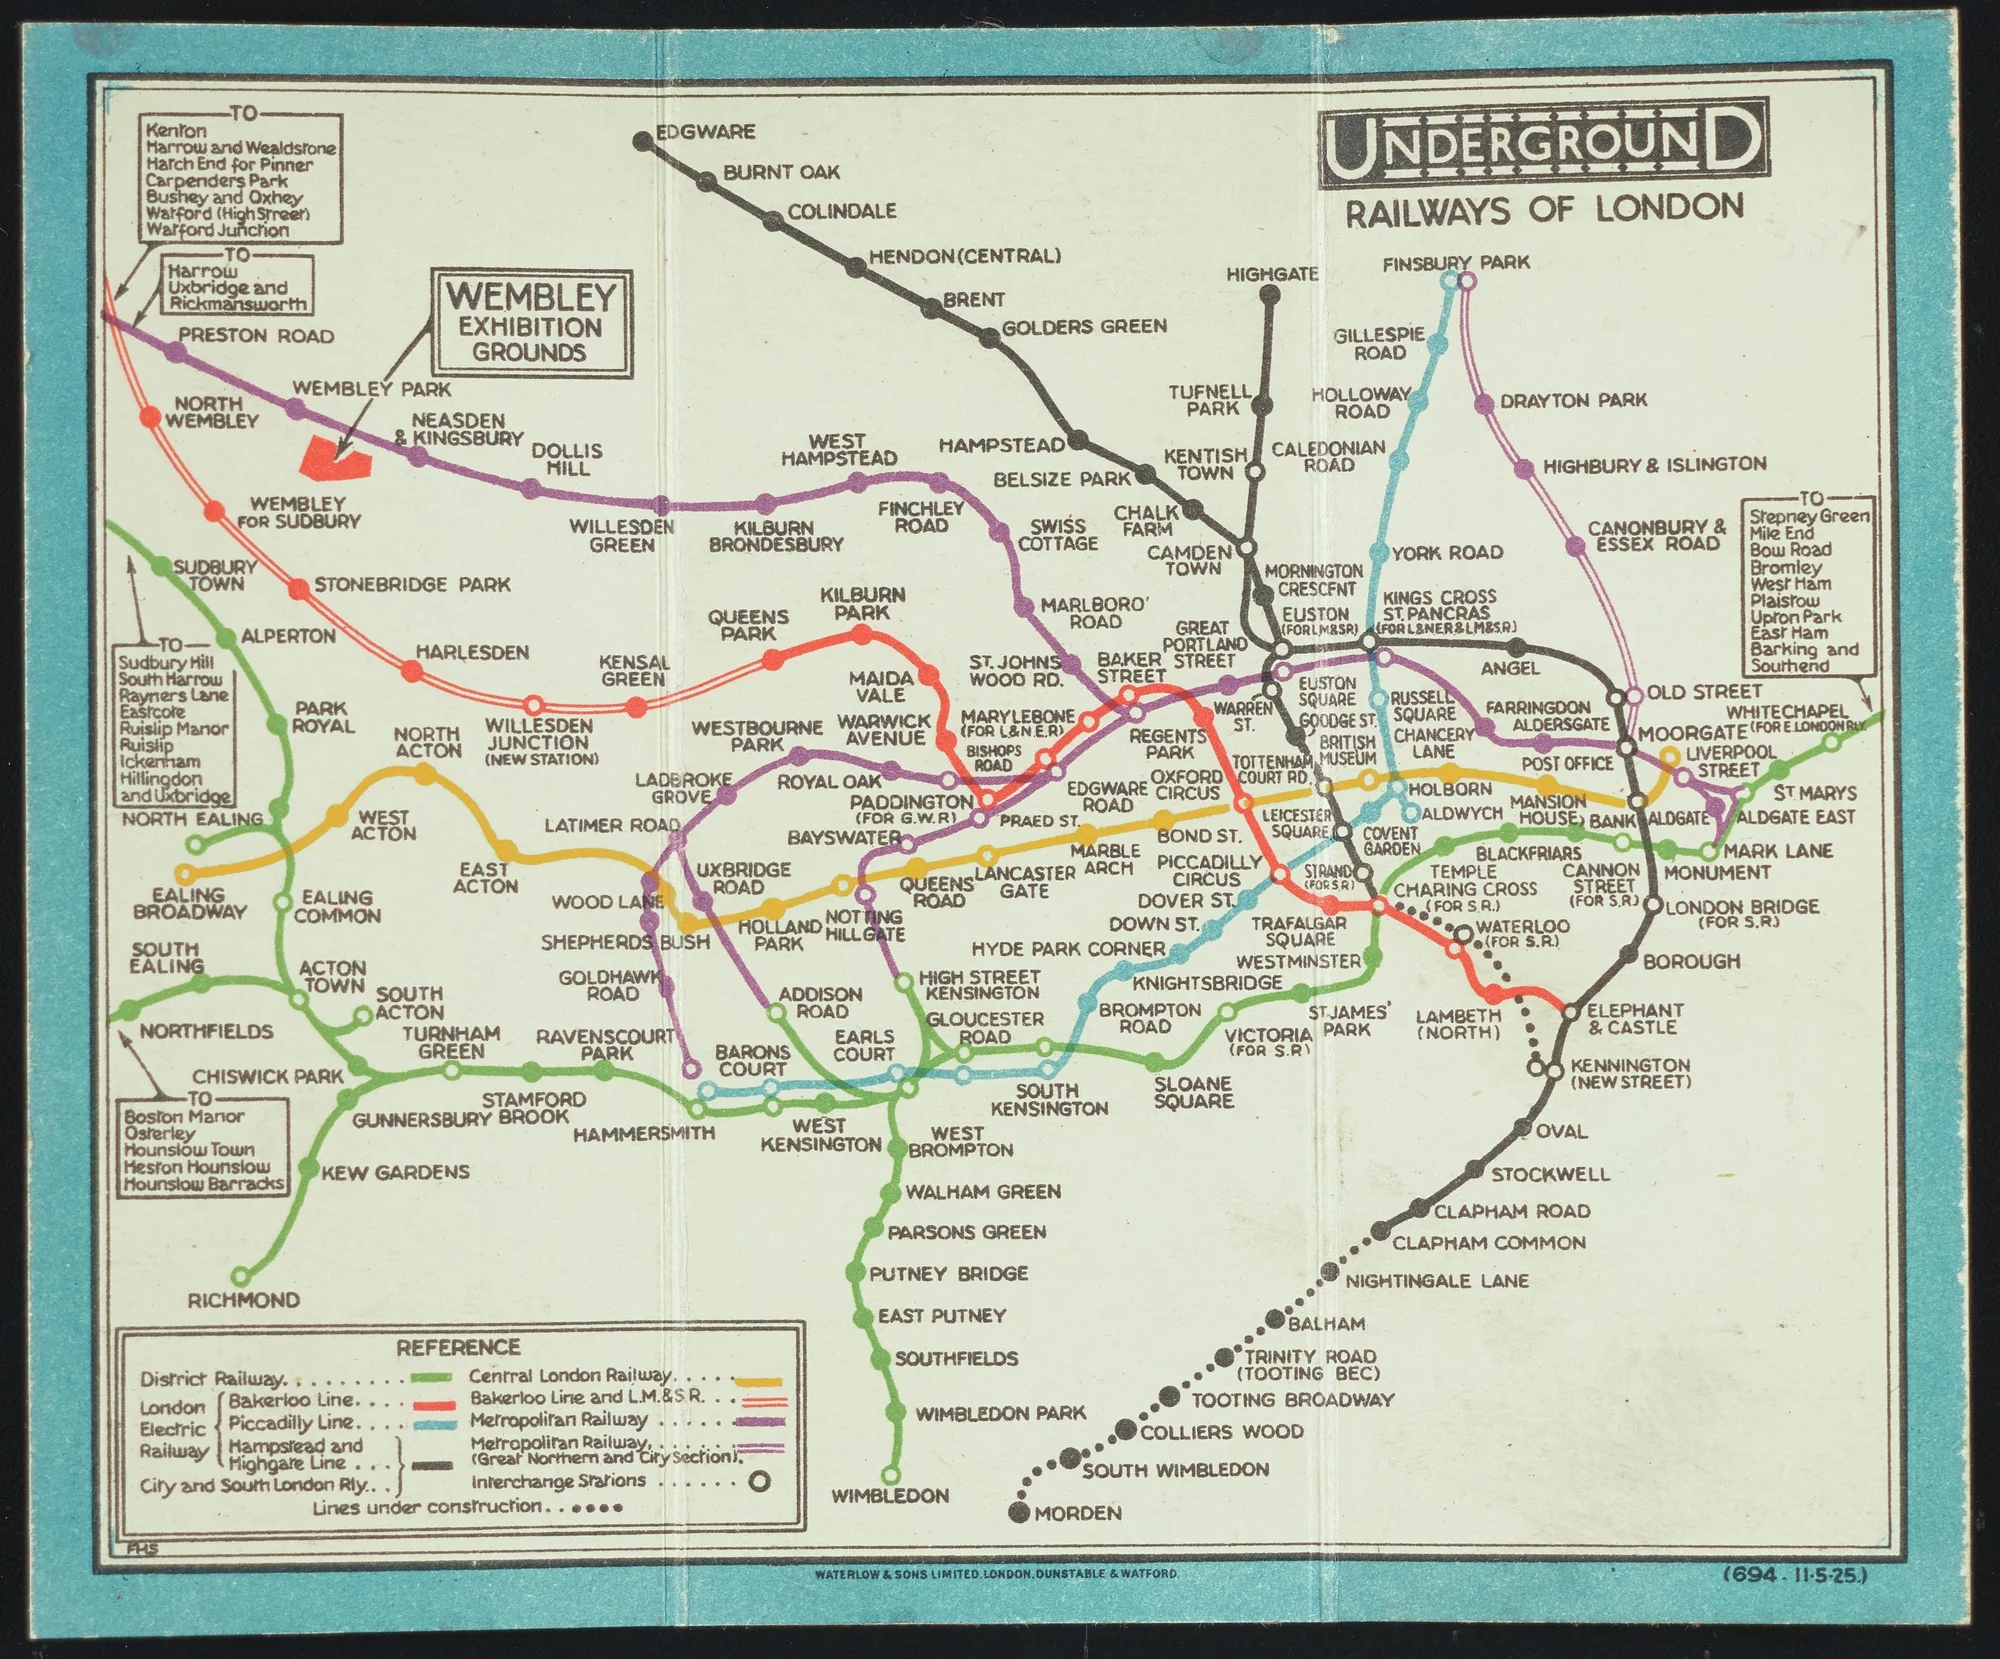 Map of London's Underground Railways, 1926